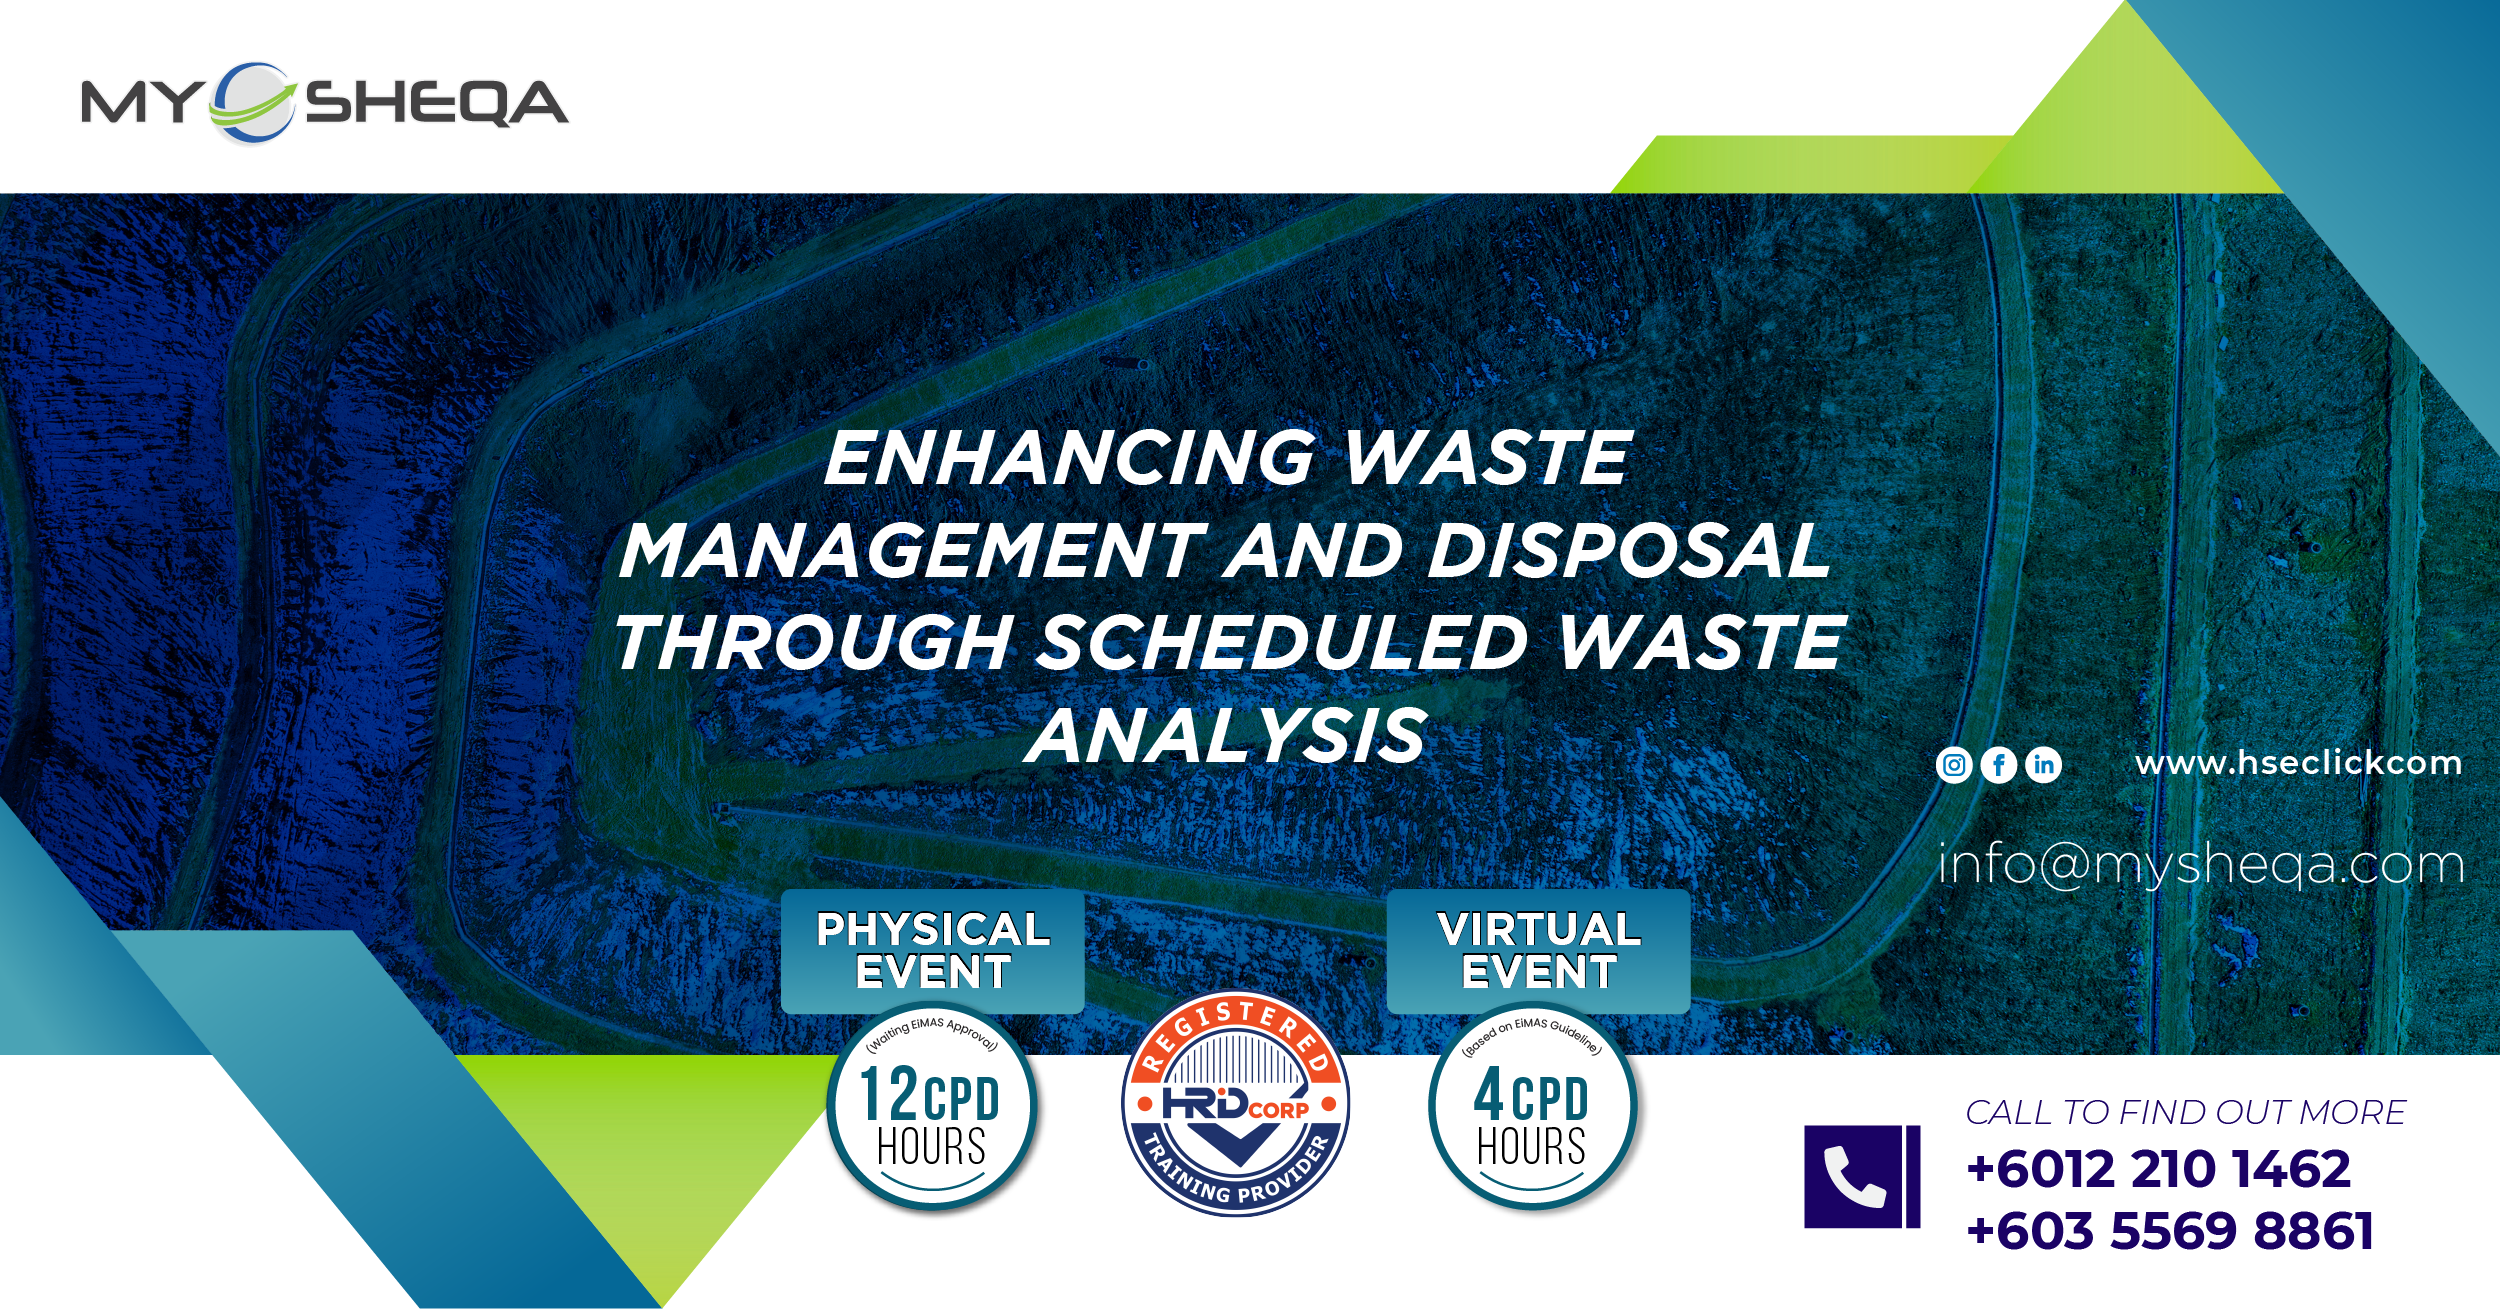 Enhancing waste management and disposal through scheduled waste analysis